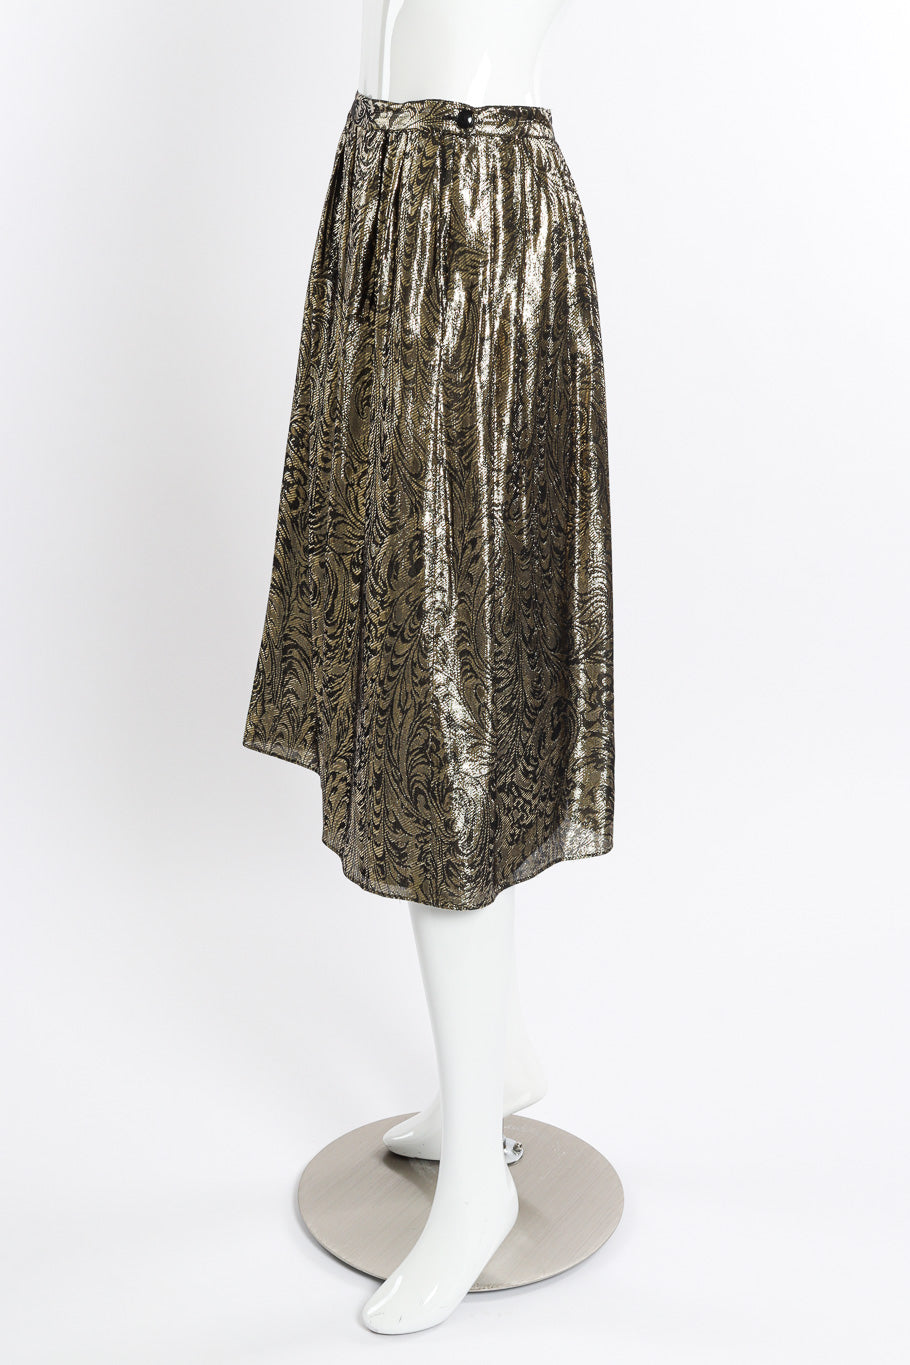 Vintage Nolan Miller Lamé Jacquard Blouse & Skirt Set skirt side on mannequin @recessla